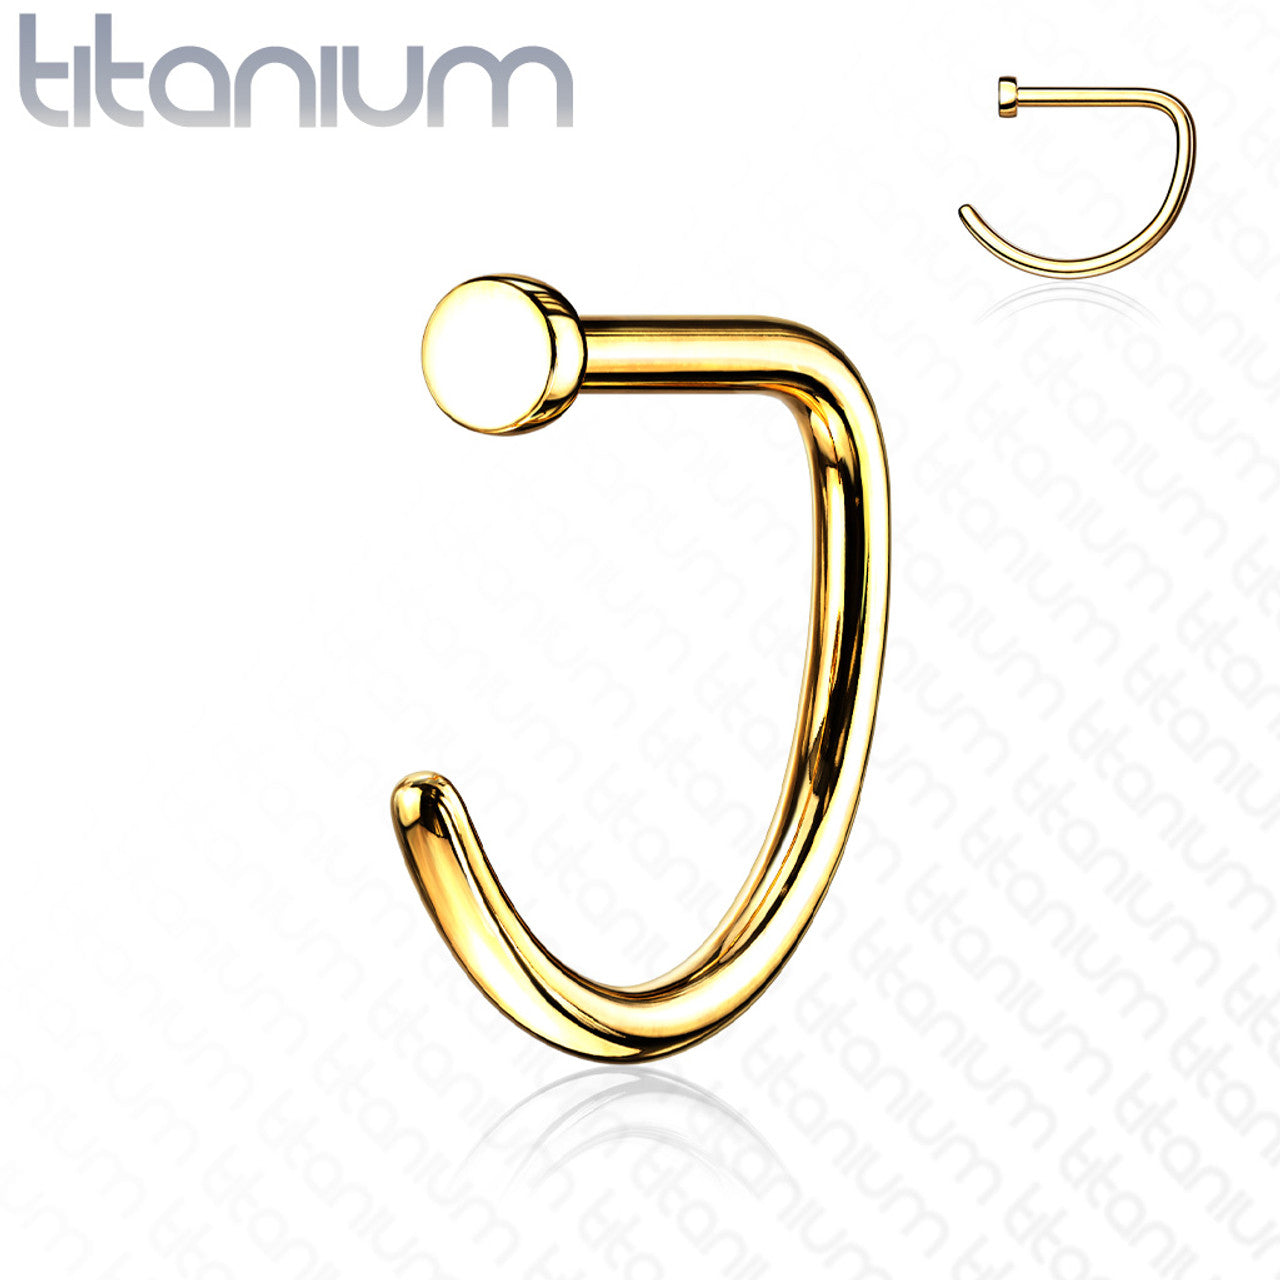 Titanium Nose Ring Hoop 20 & 18 Gauge D Shape With Flat End